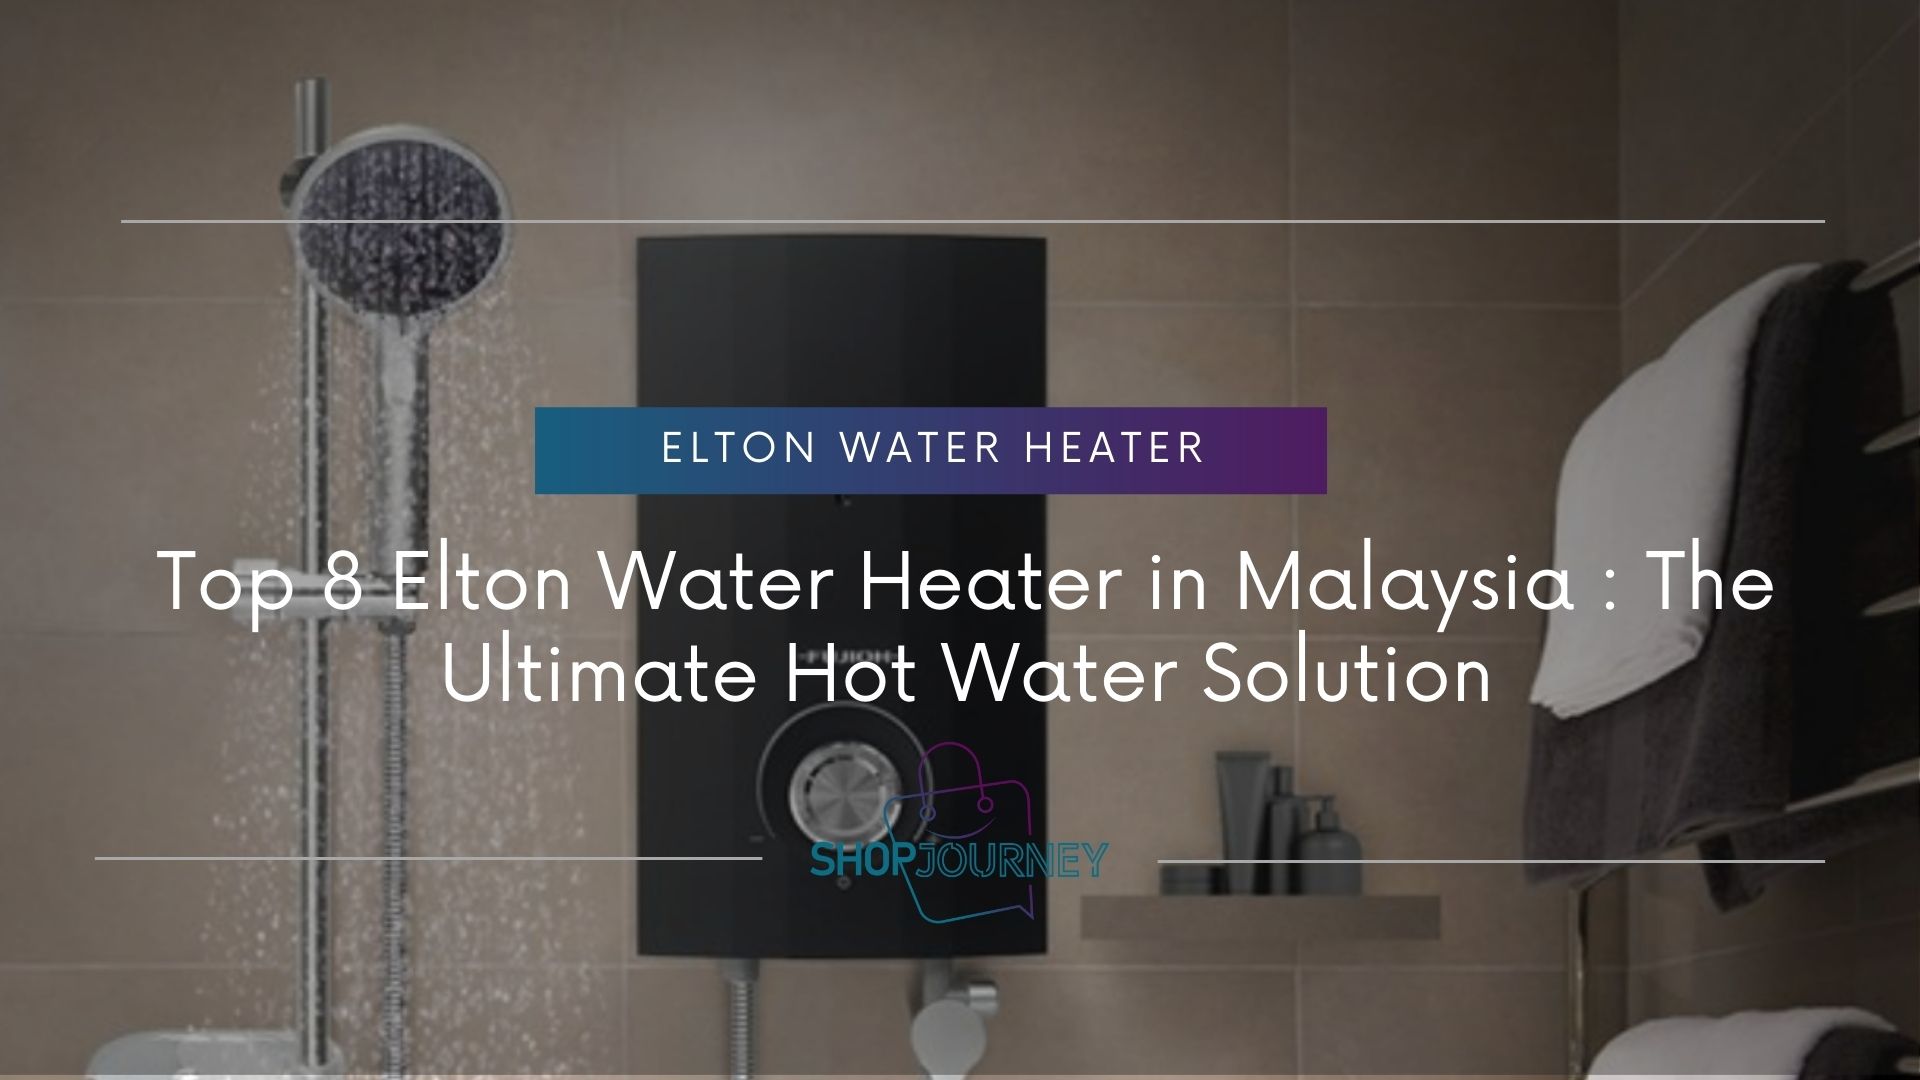 Elton water heater - shop journey